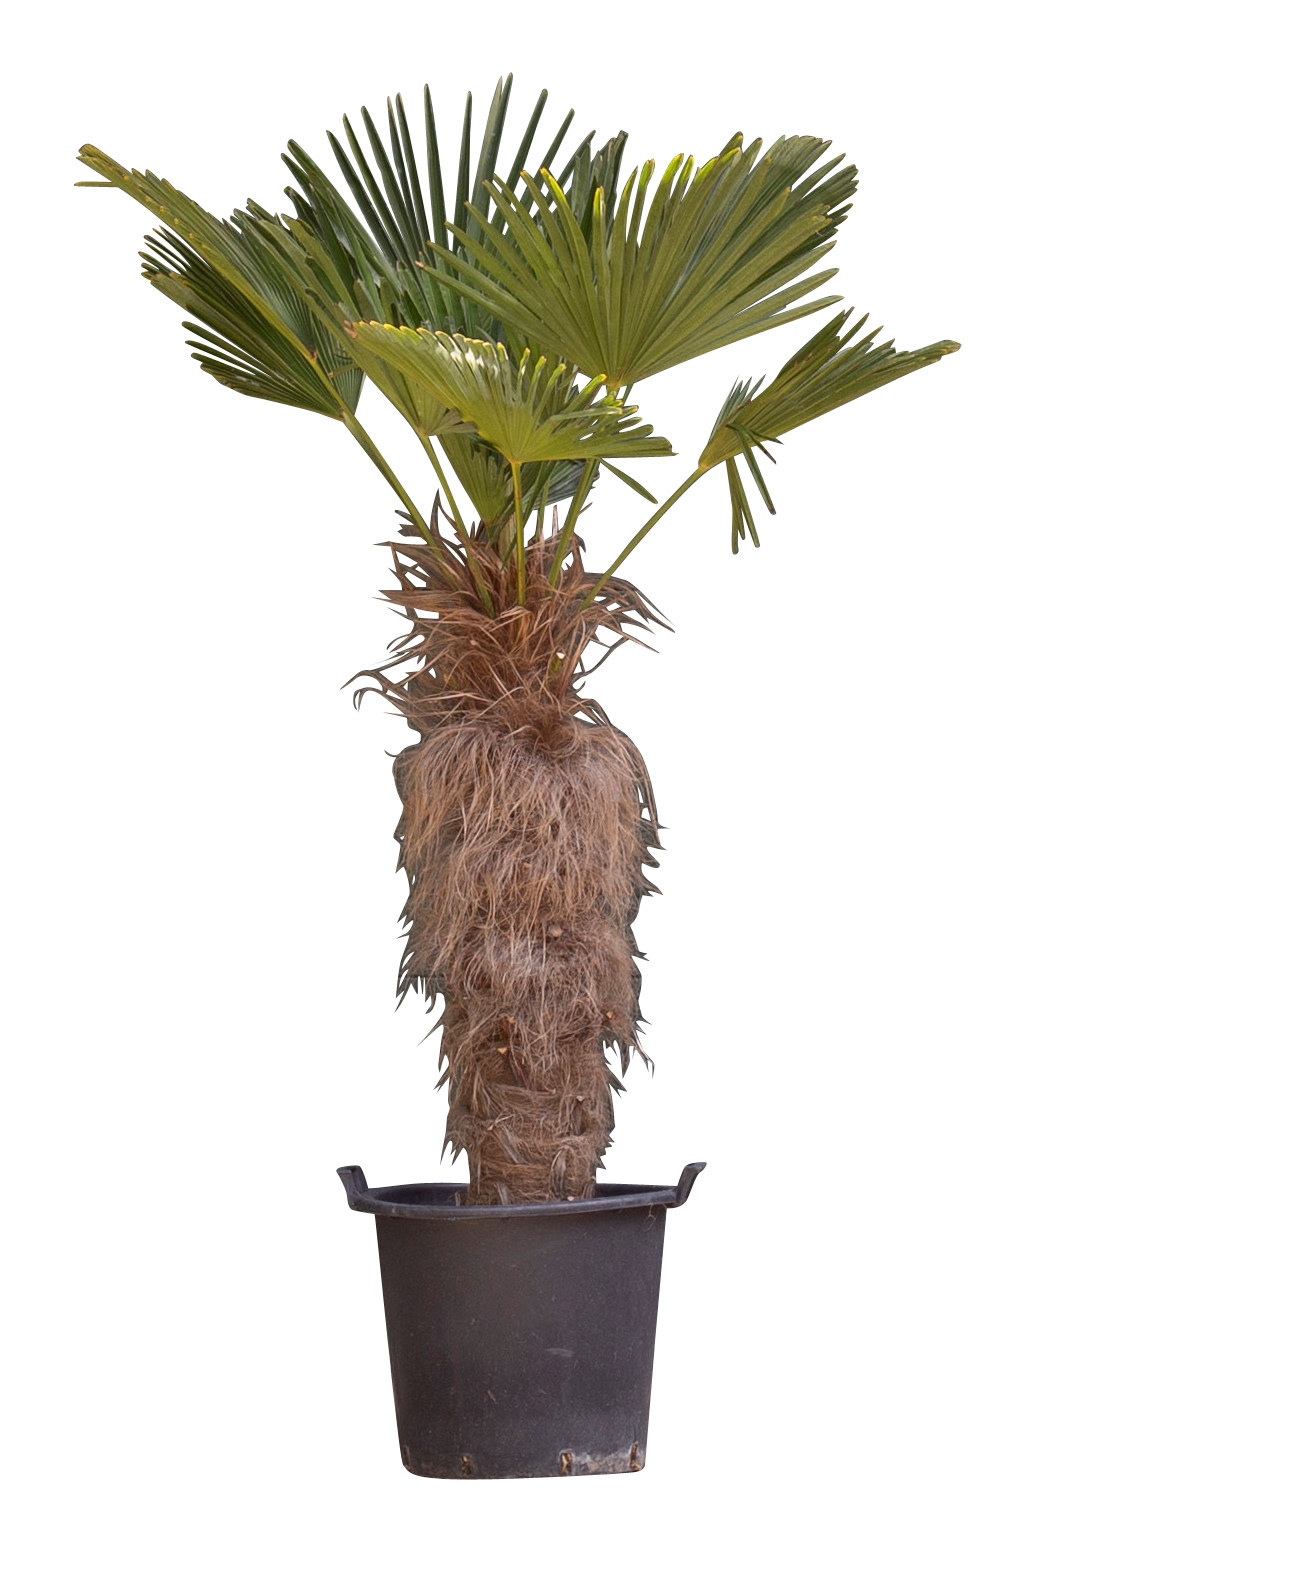 Wagner palm - 'Trachycarpus wagnerianus' (80-100 cm stamhoogte)